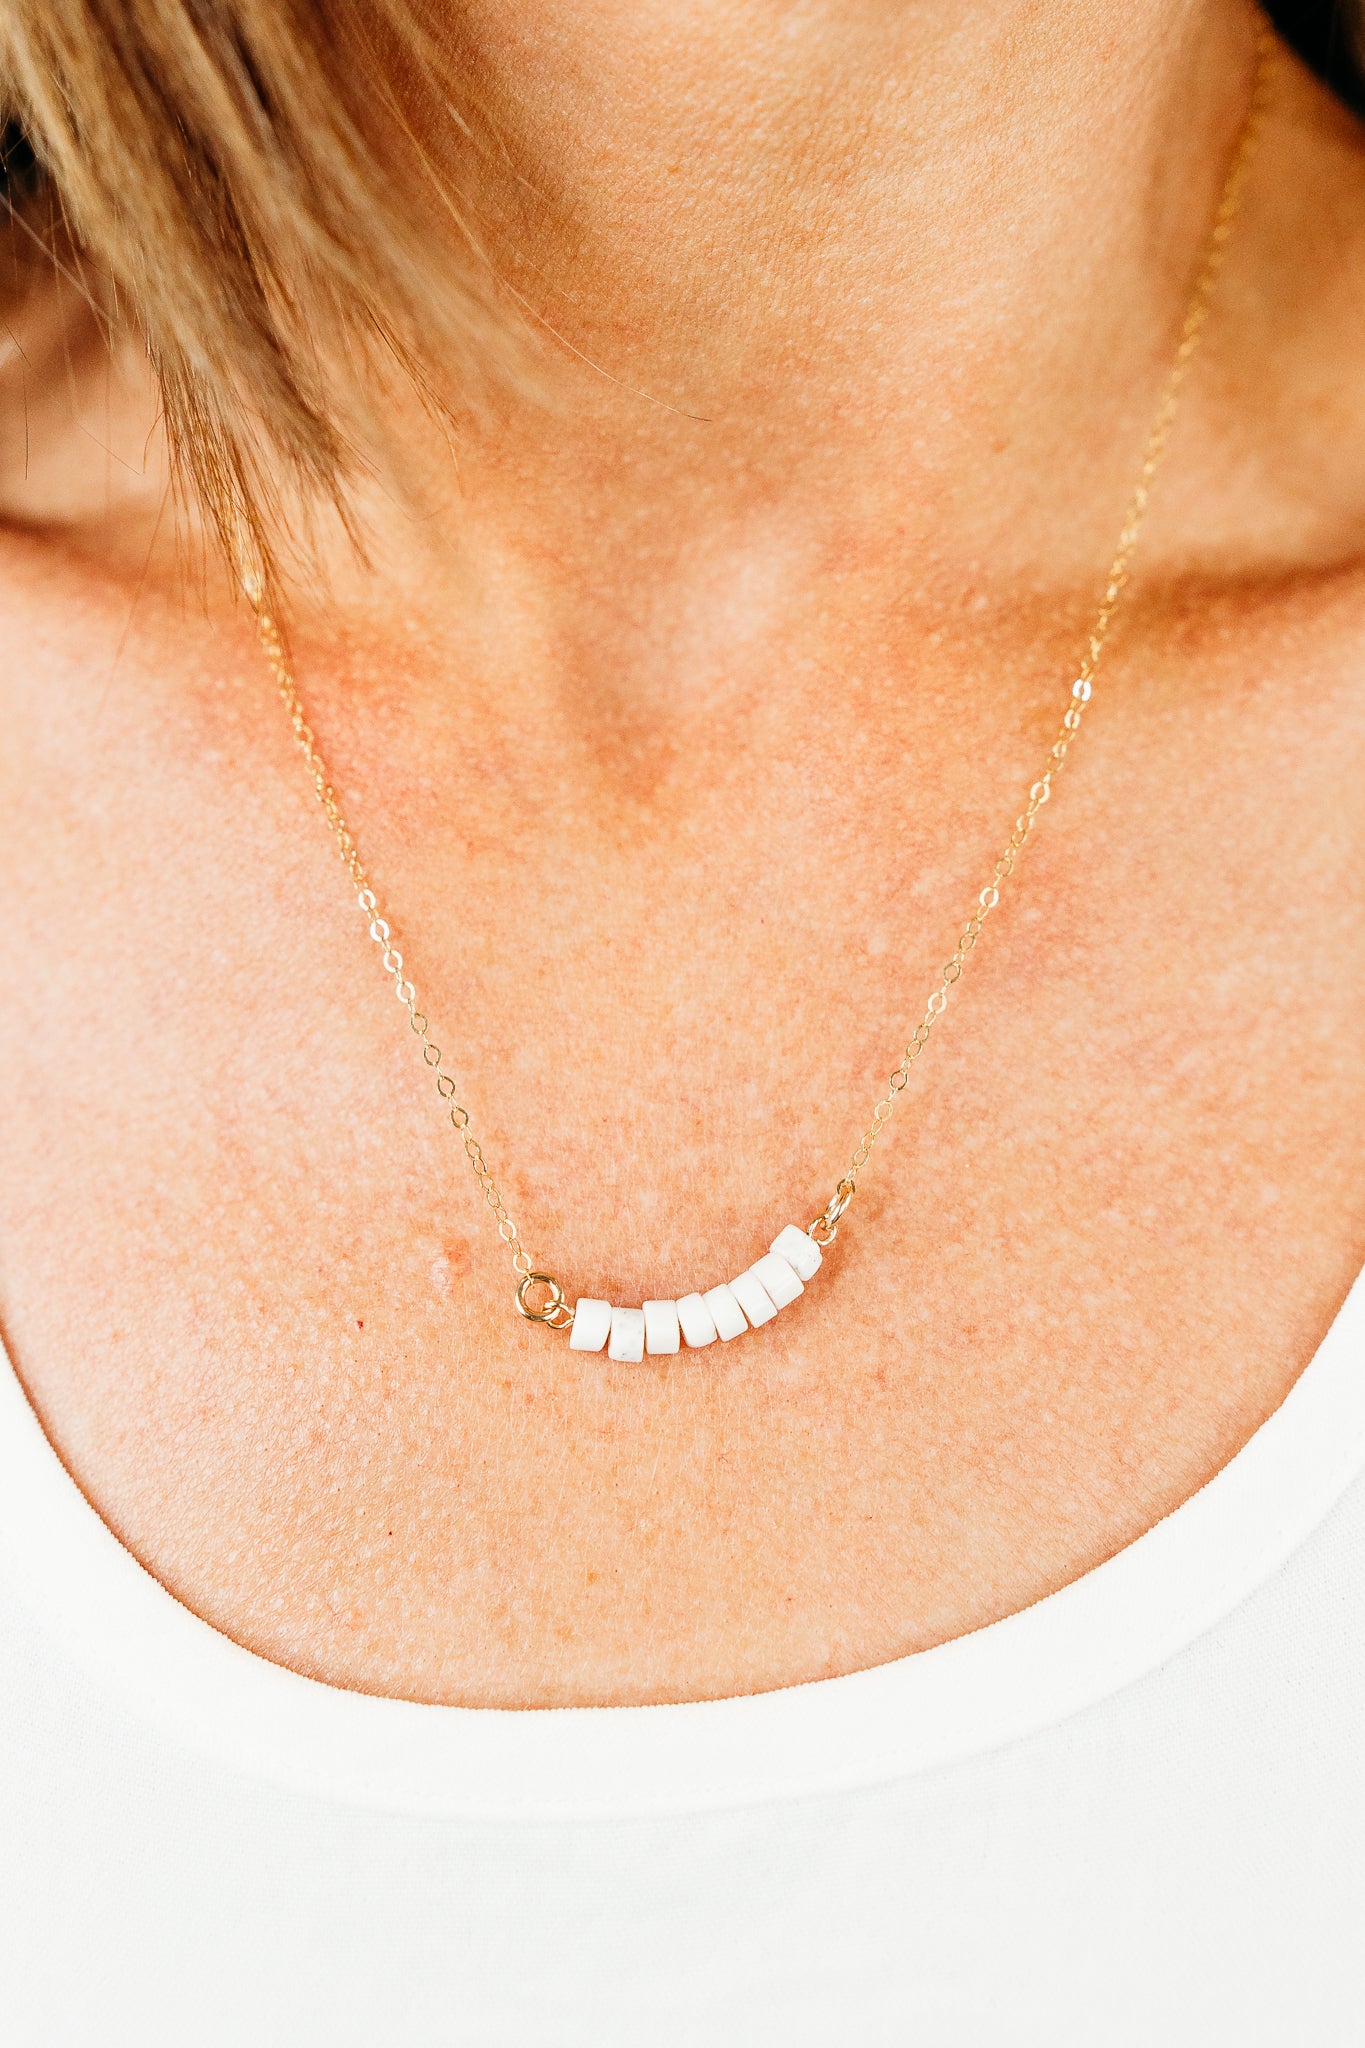 Gem Stone Bar Necklace by Love, Poppy Jewels